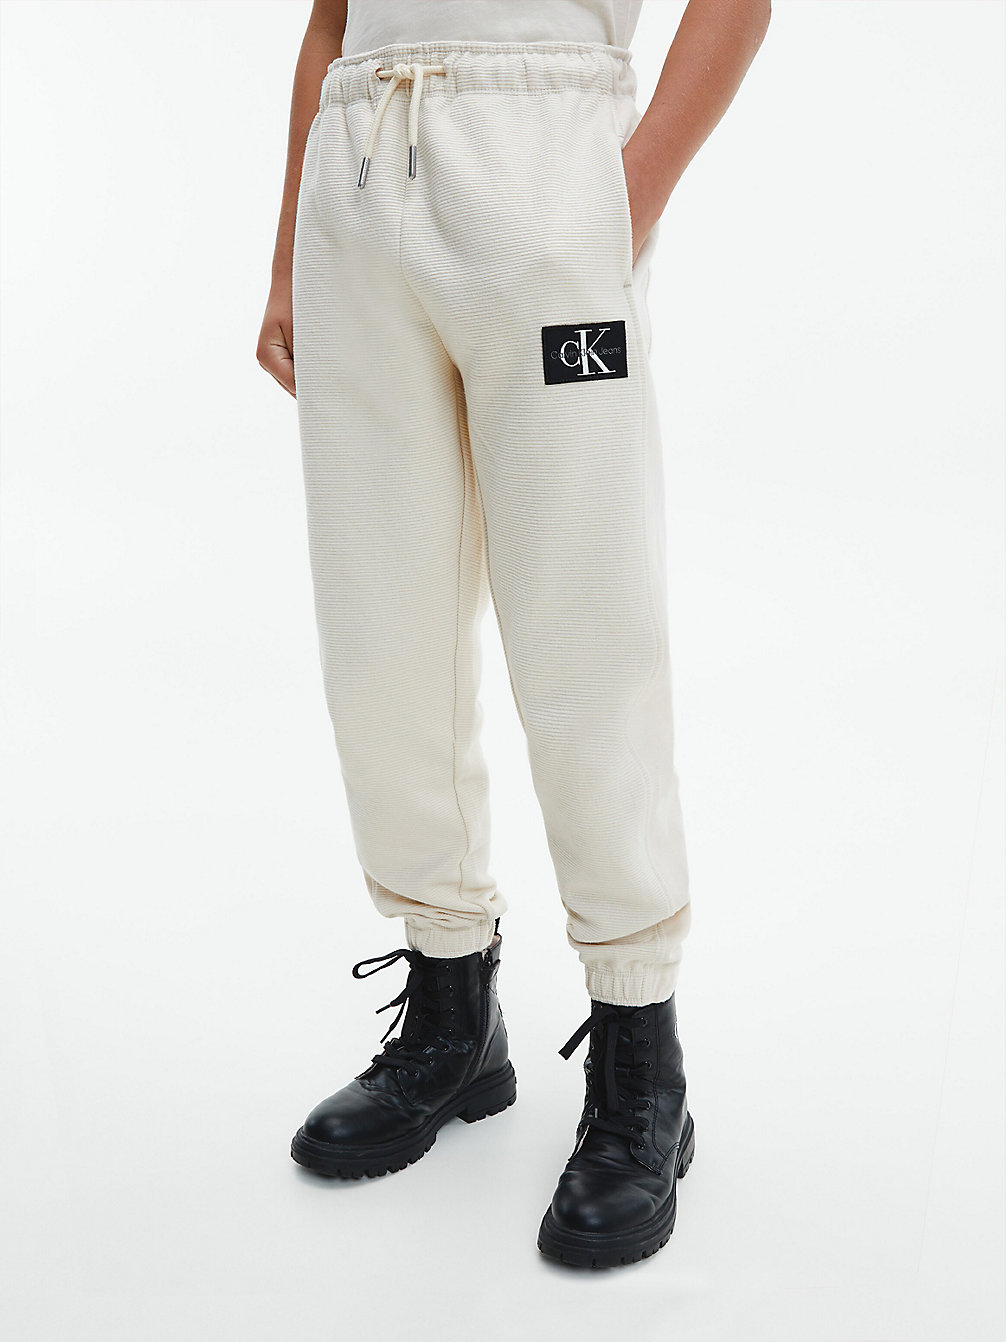 MUSLIN > Teksturowane Spodnie Dresowe > undefined boys - Calvin Klein